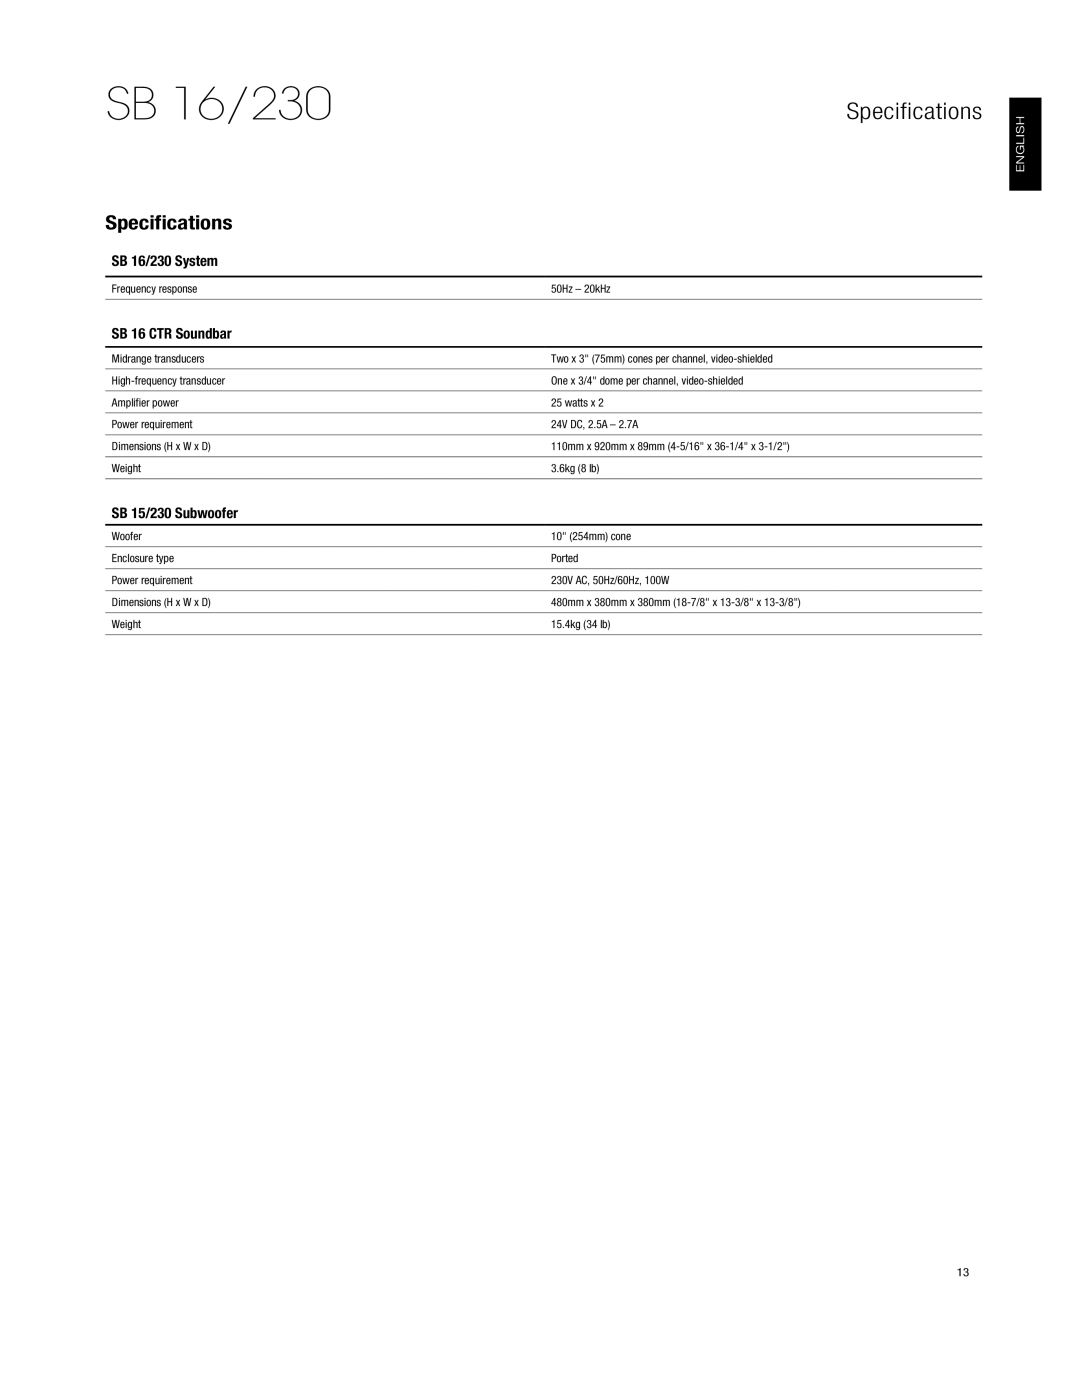 Harman-Kardon HKSB16BLK owner manual Specifications, SB 16/230 System, SB 16 CTR Soundbar, SB 15/230 Subwoofer, English 